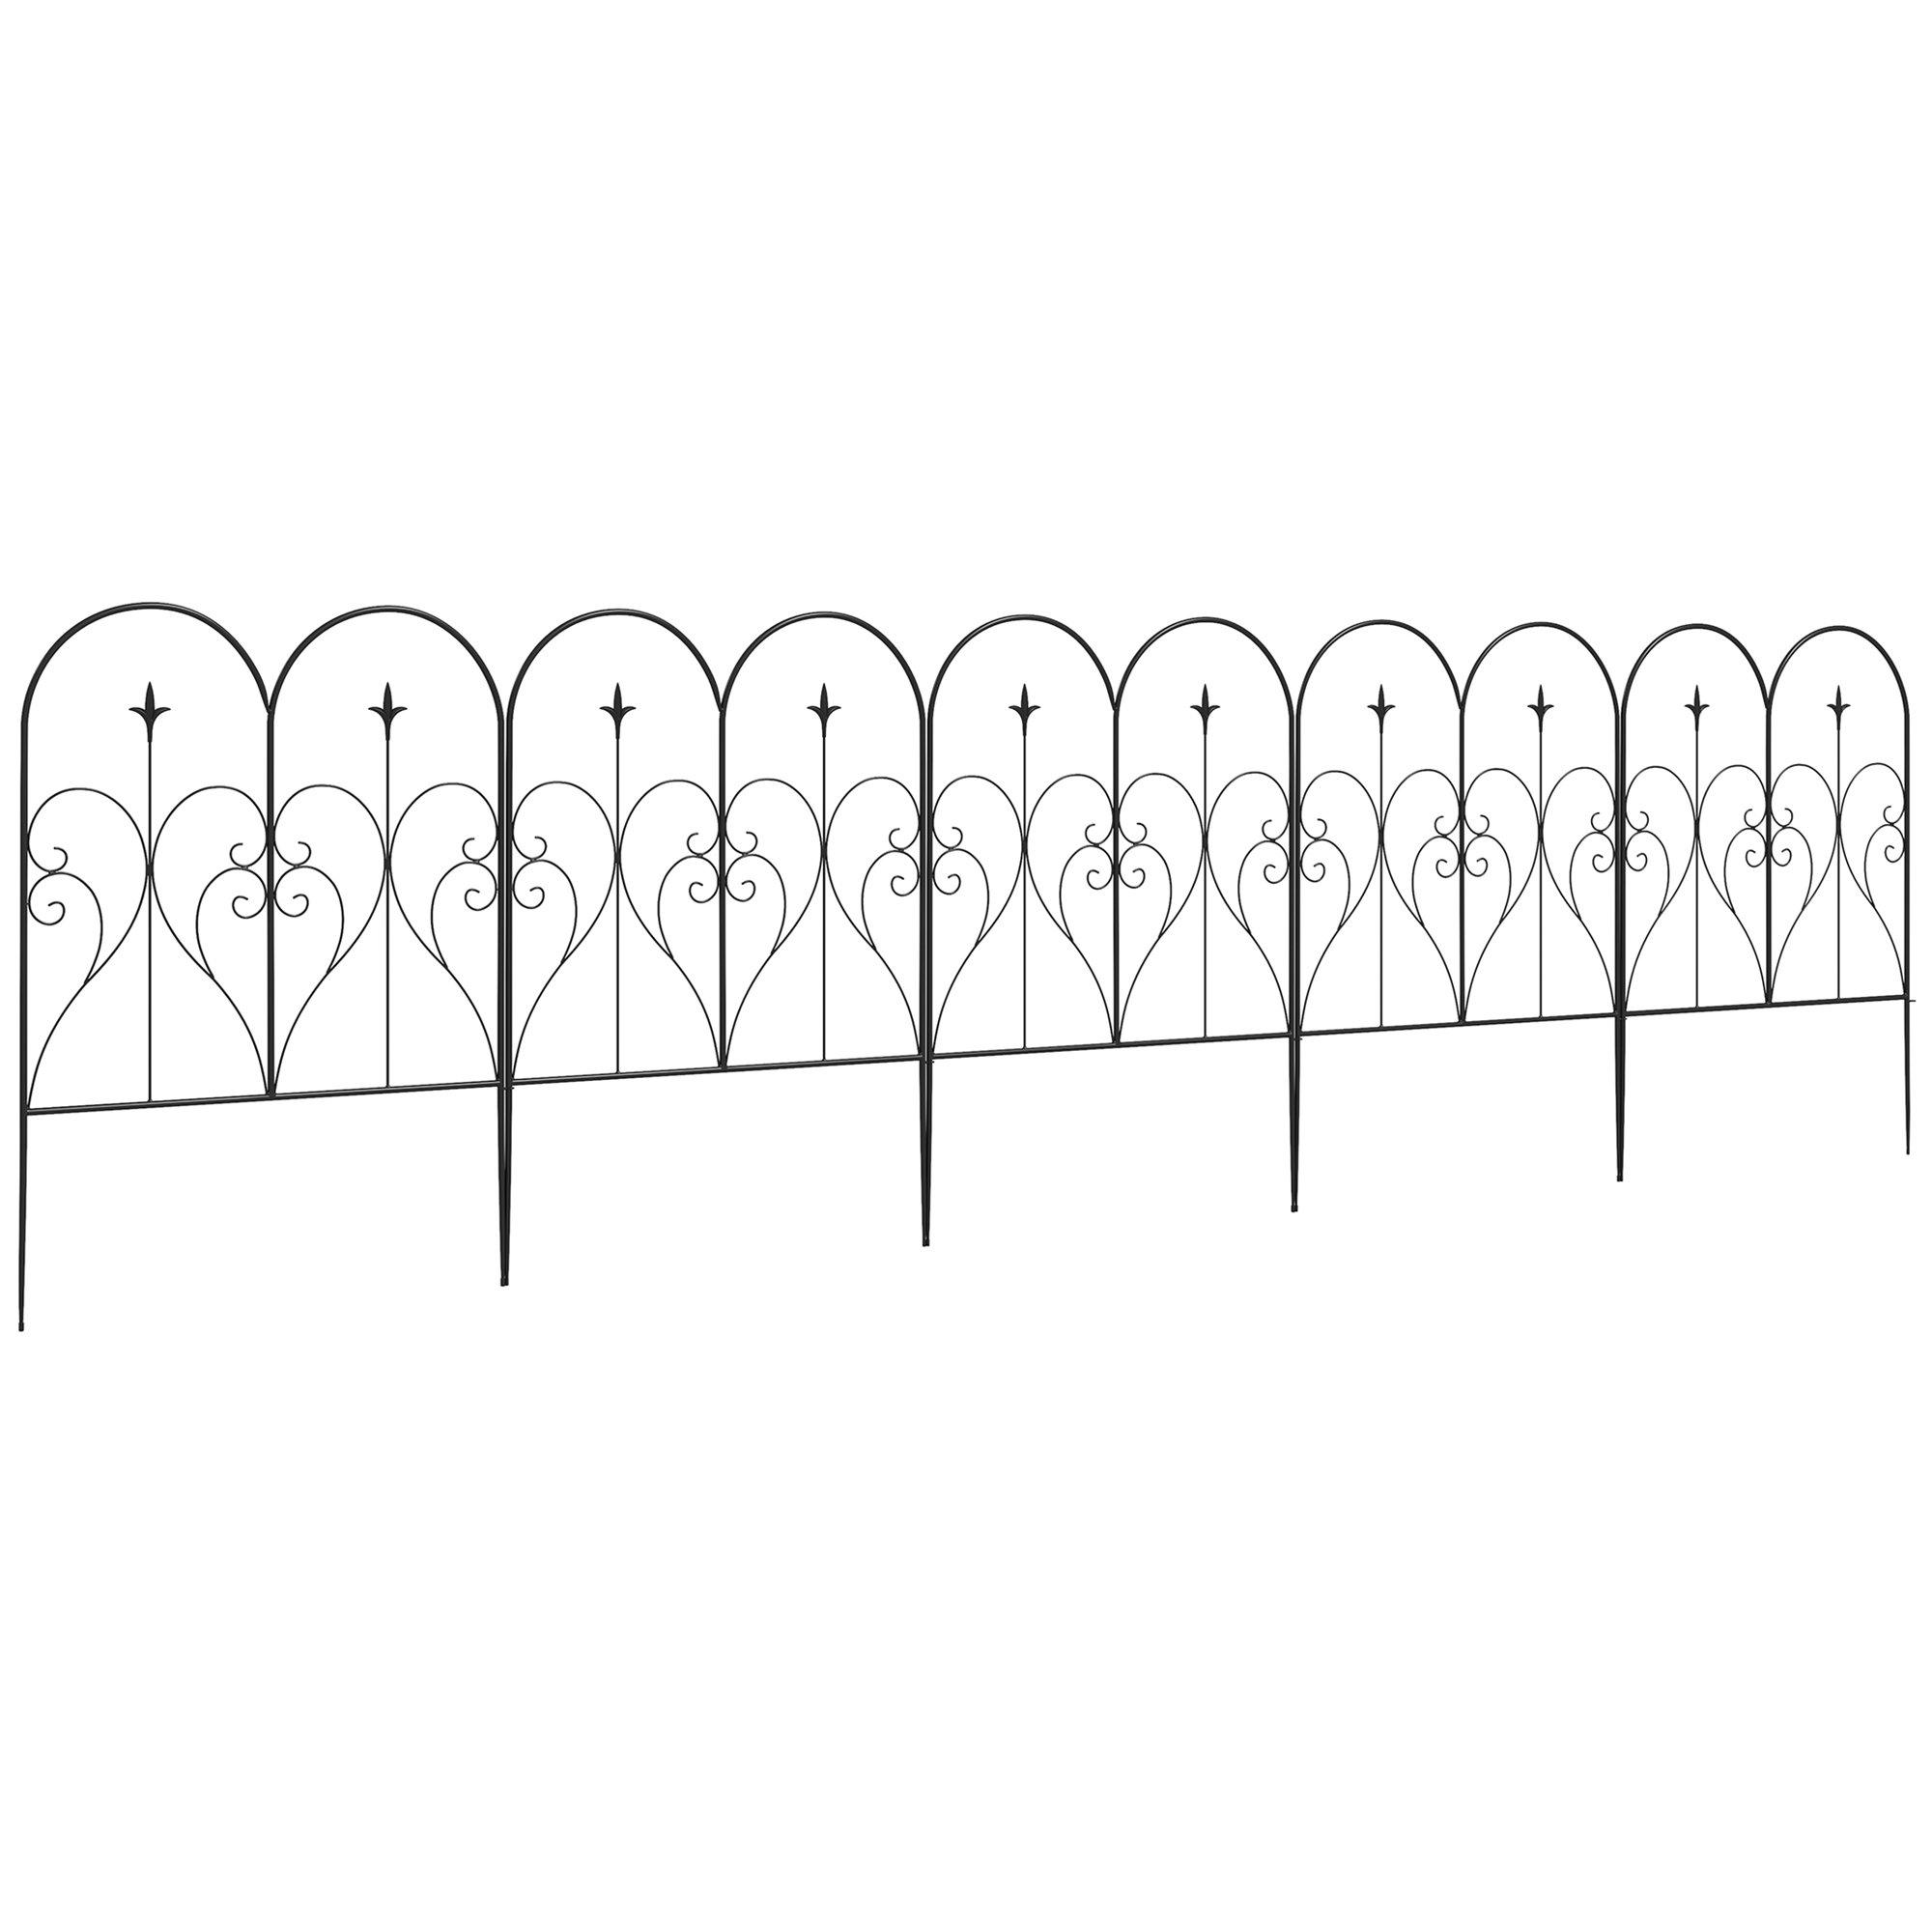 5PCs Decorative Garden Fencing 32in x 10ft Metal Border Edging